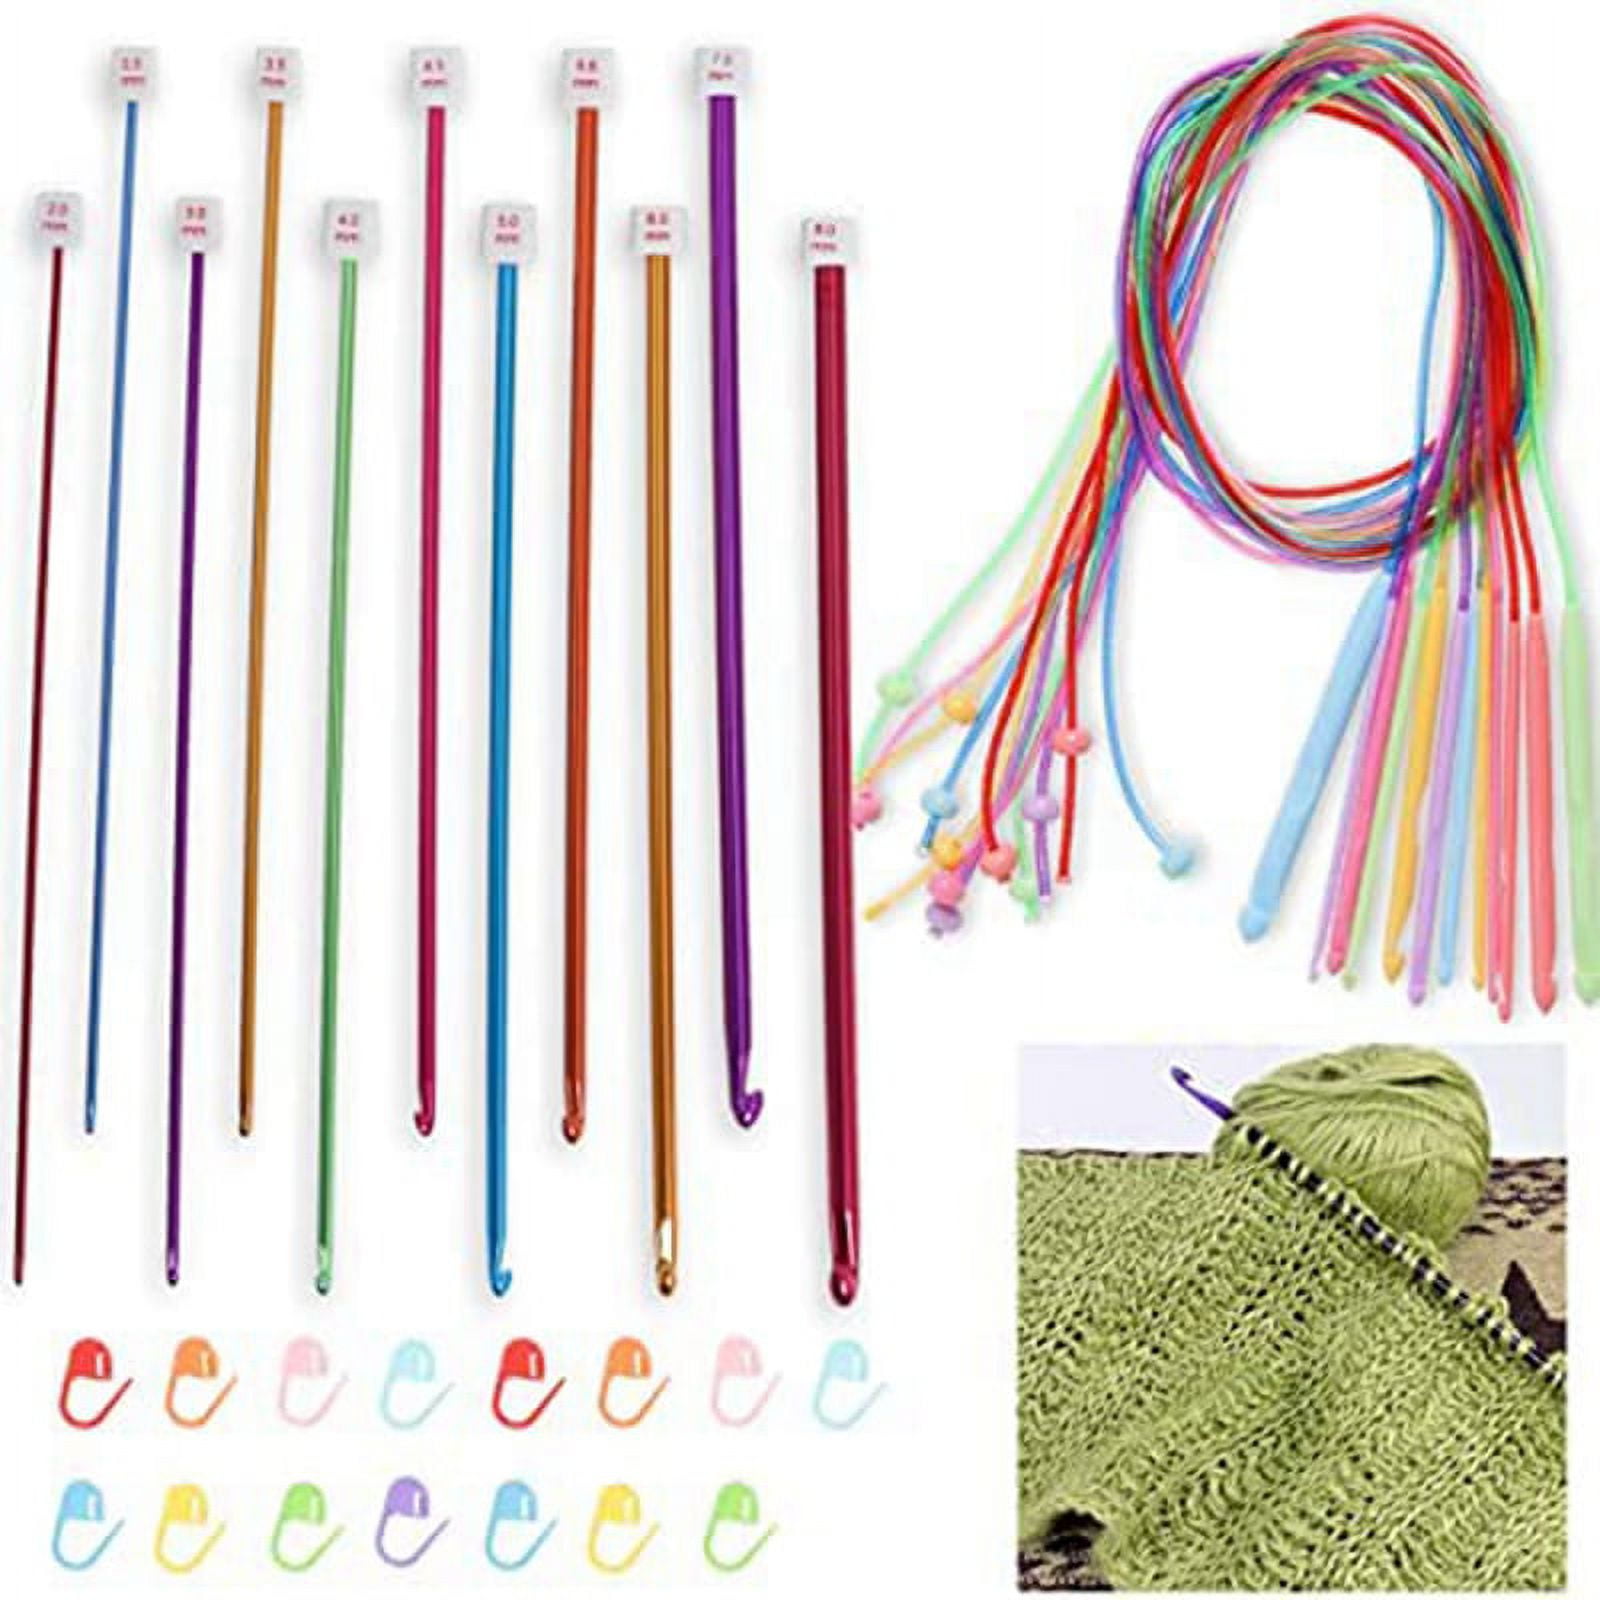 12pcs Colourful Plastic TUNISIAN AFGHAN Crochet Hook Knit Needles Set  3.5-12mm